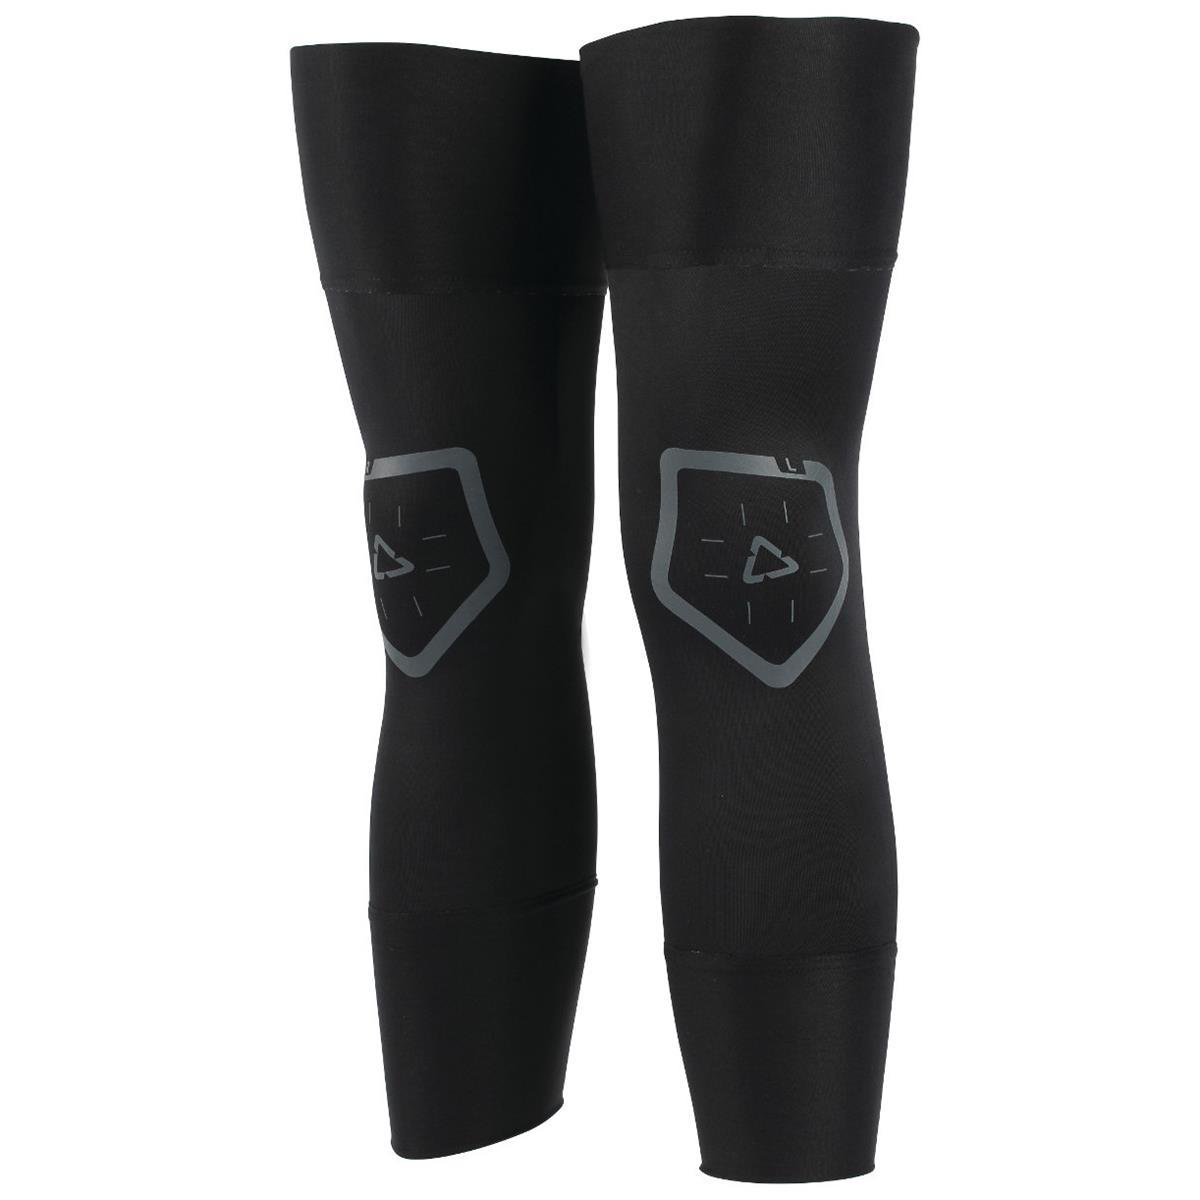 Leatt Knee Brace Sleeve C-Frame Black - Pair | Maciag Offroad